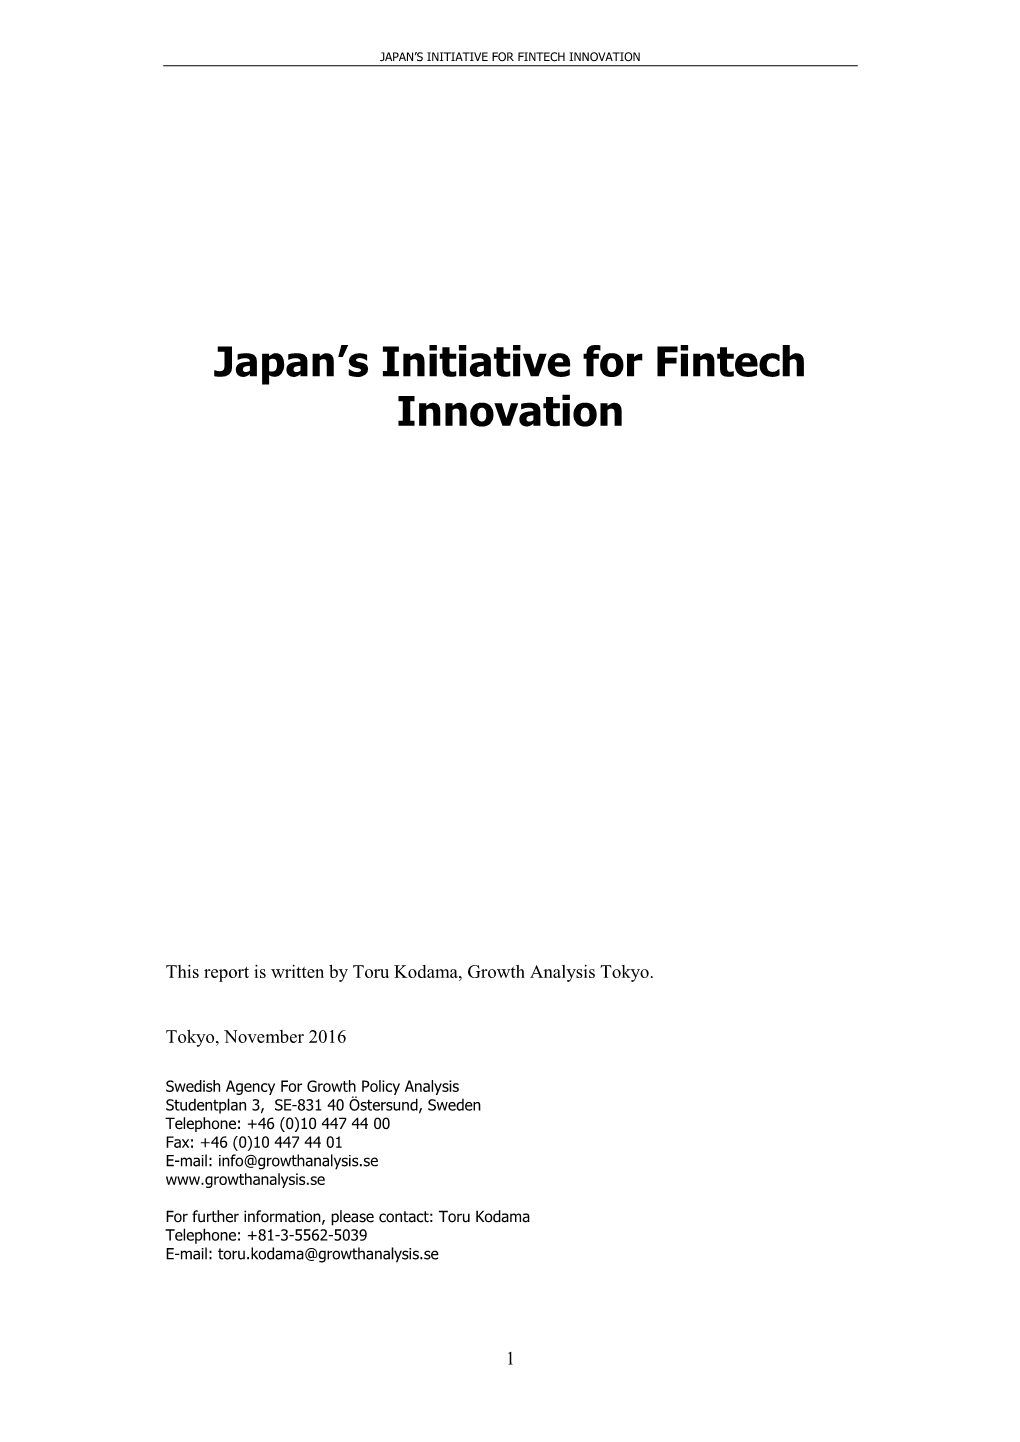 Japan's Initiative for Fintech Innovation